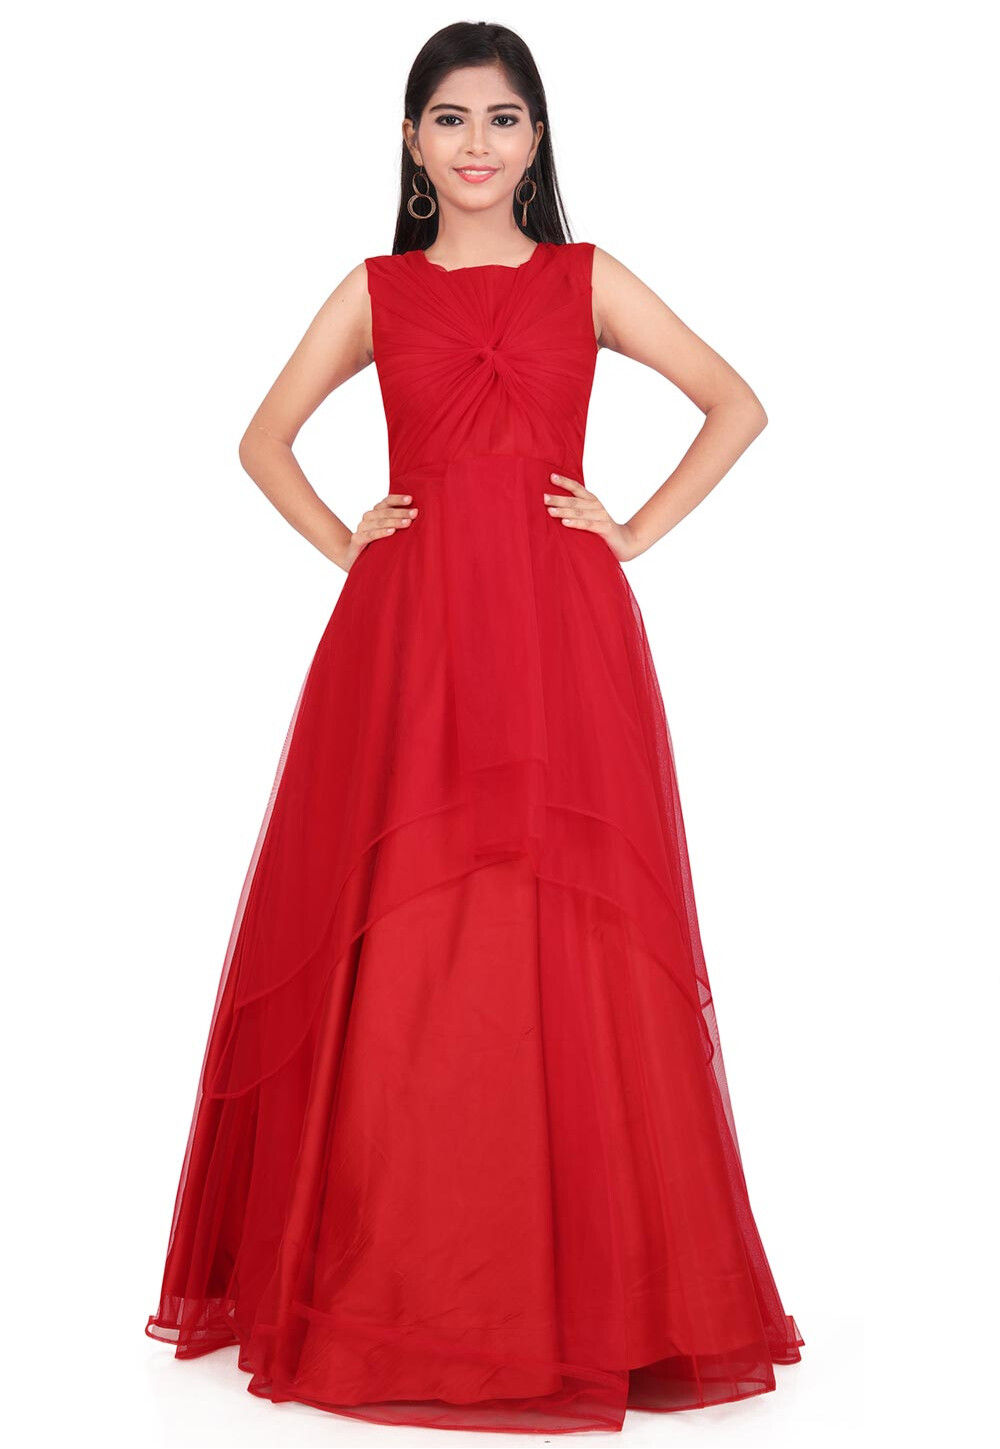 Net A-line flare and Flowy Umbrella Dress | Stylish dresses, Gown party  wear, Fancy dress design